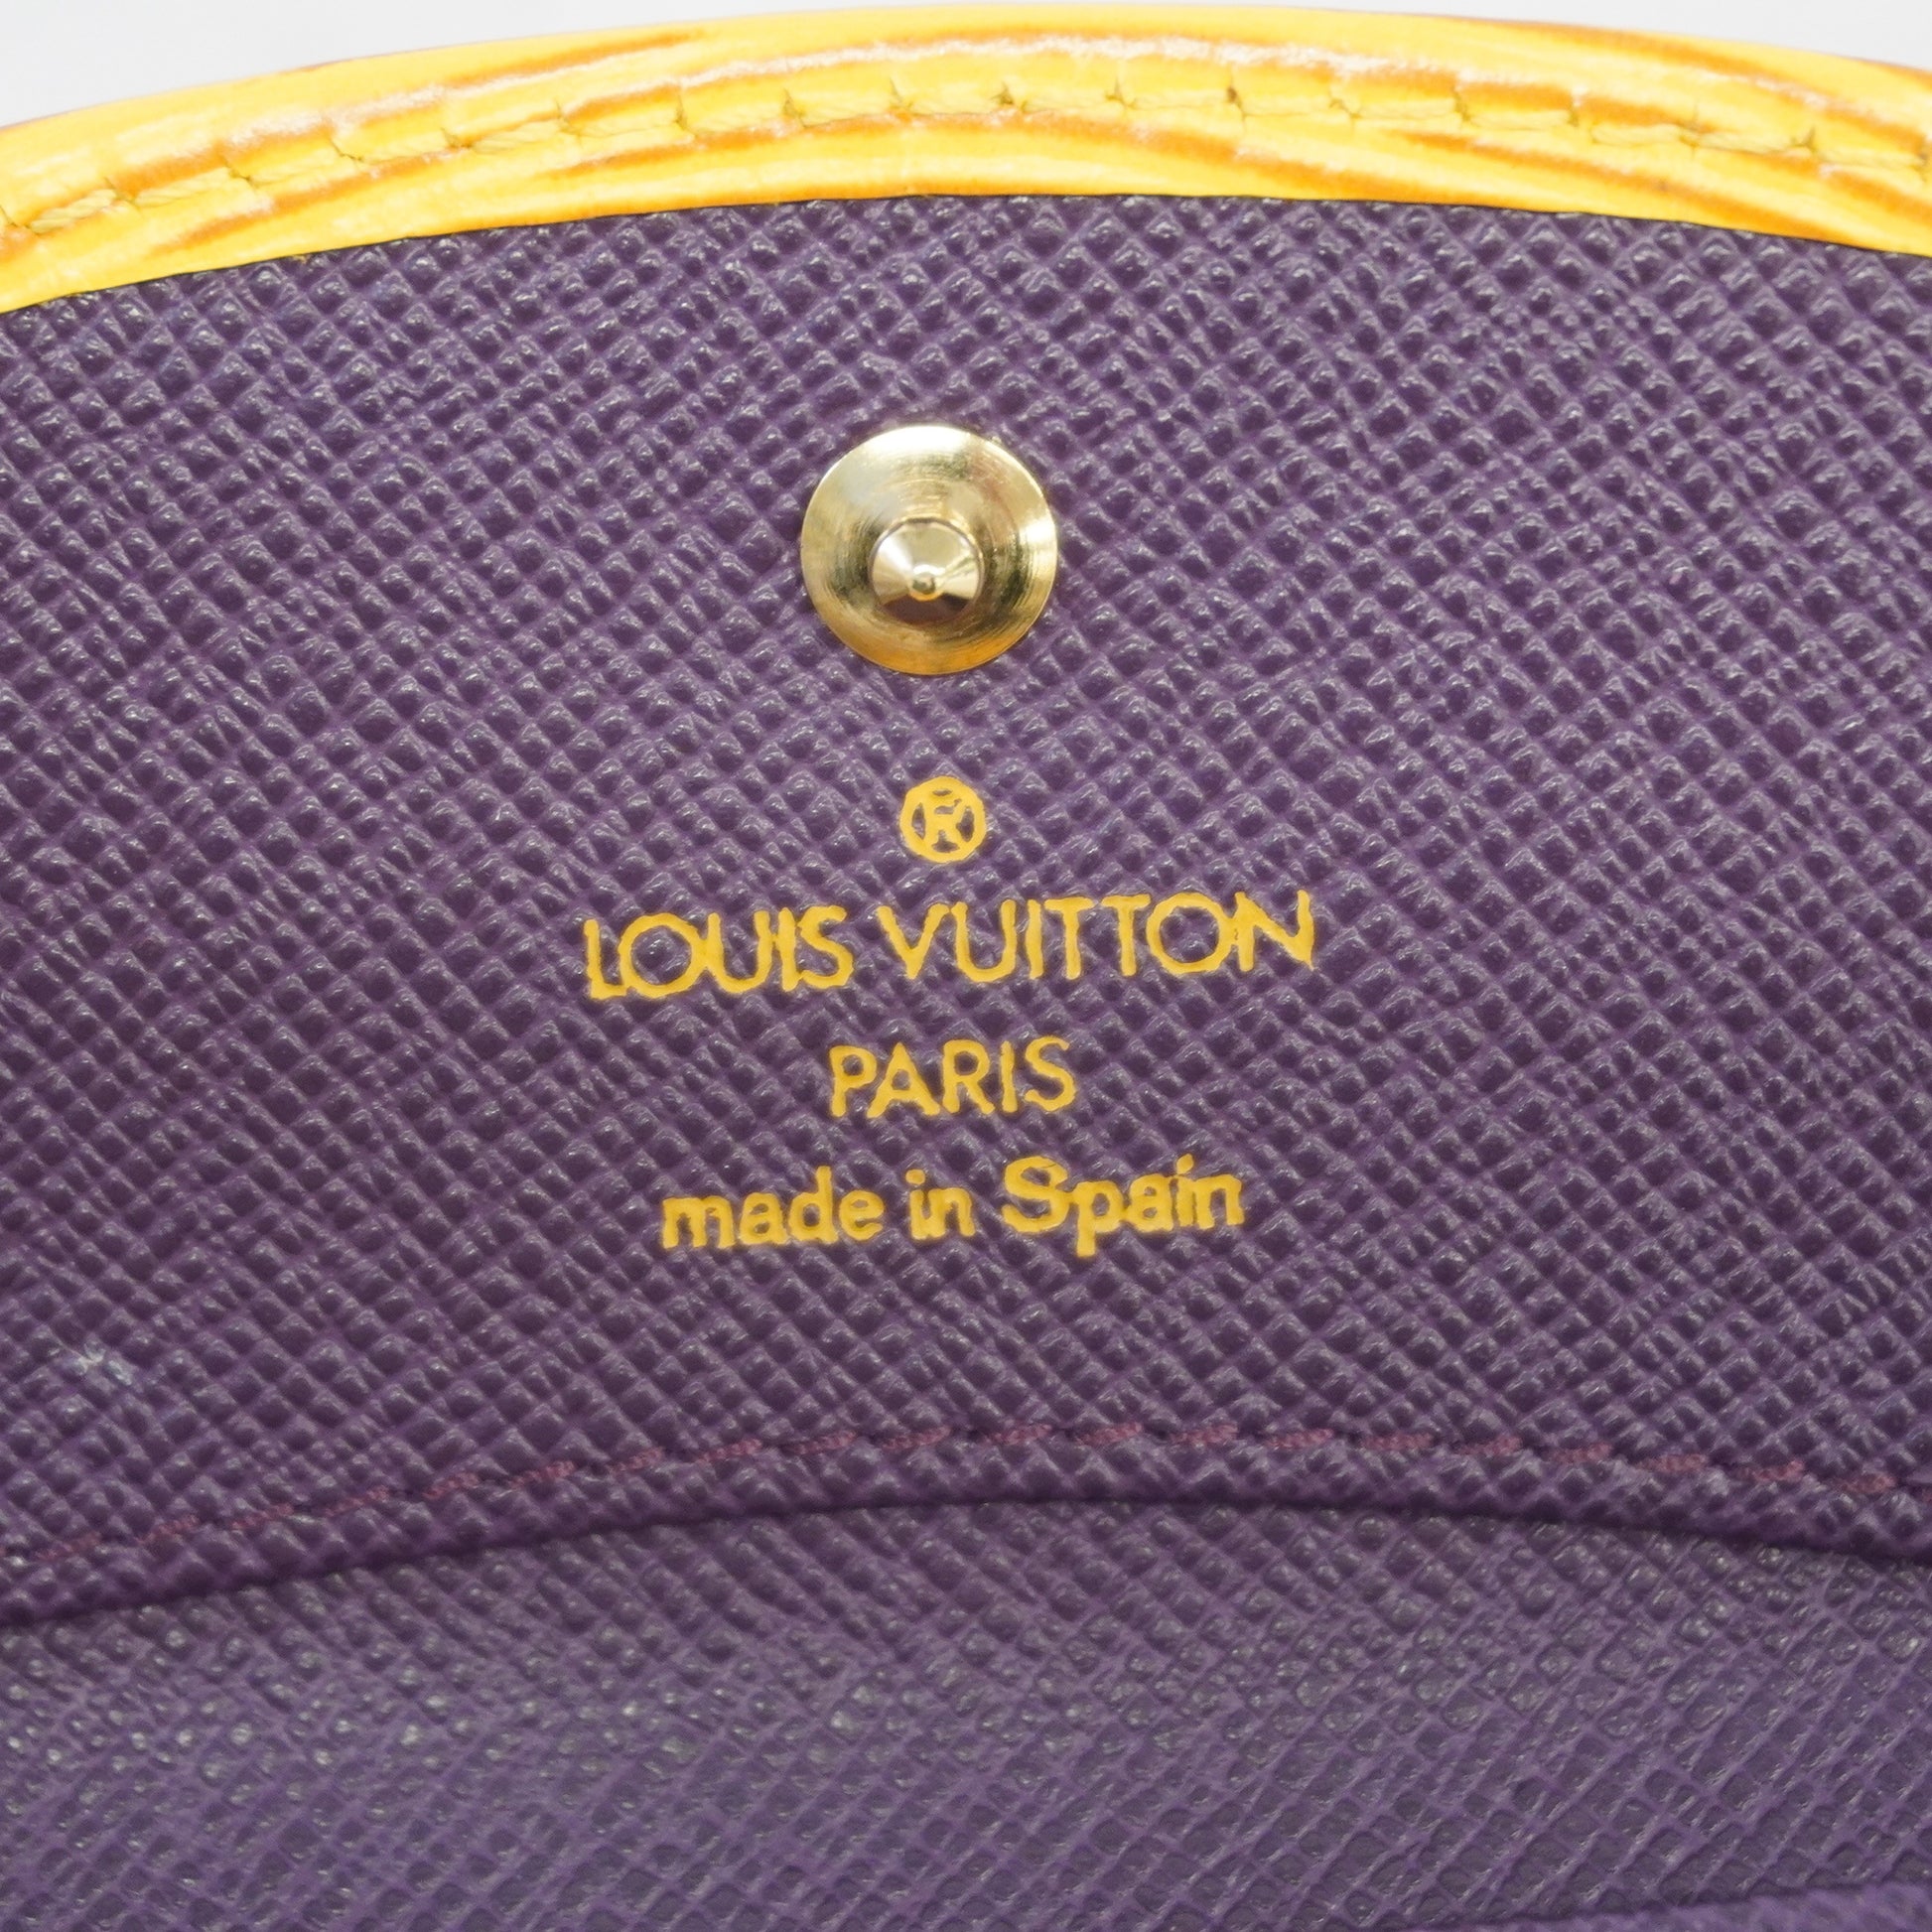 Louis Vuitton Geldbörsenvergleich - Emilie, Sarah, Mahina Coin